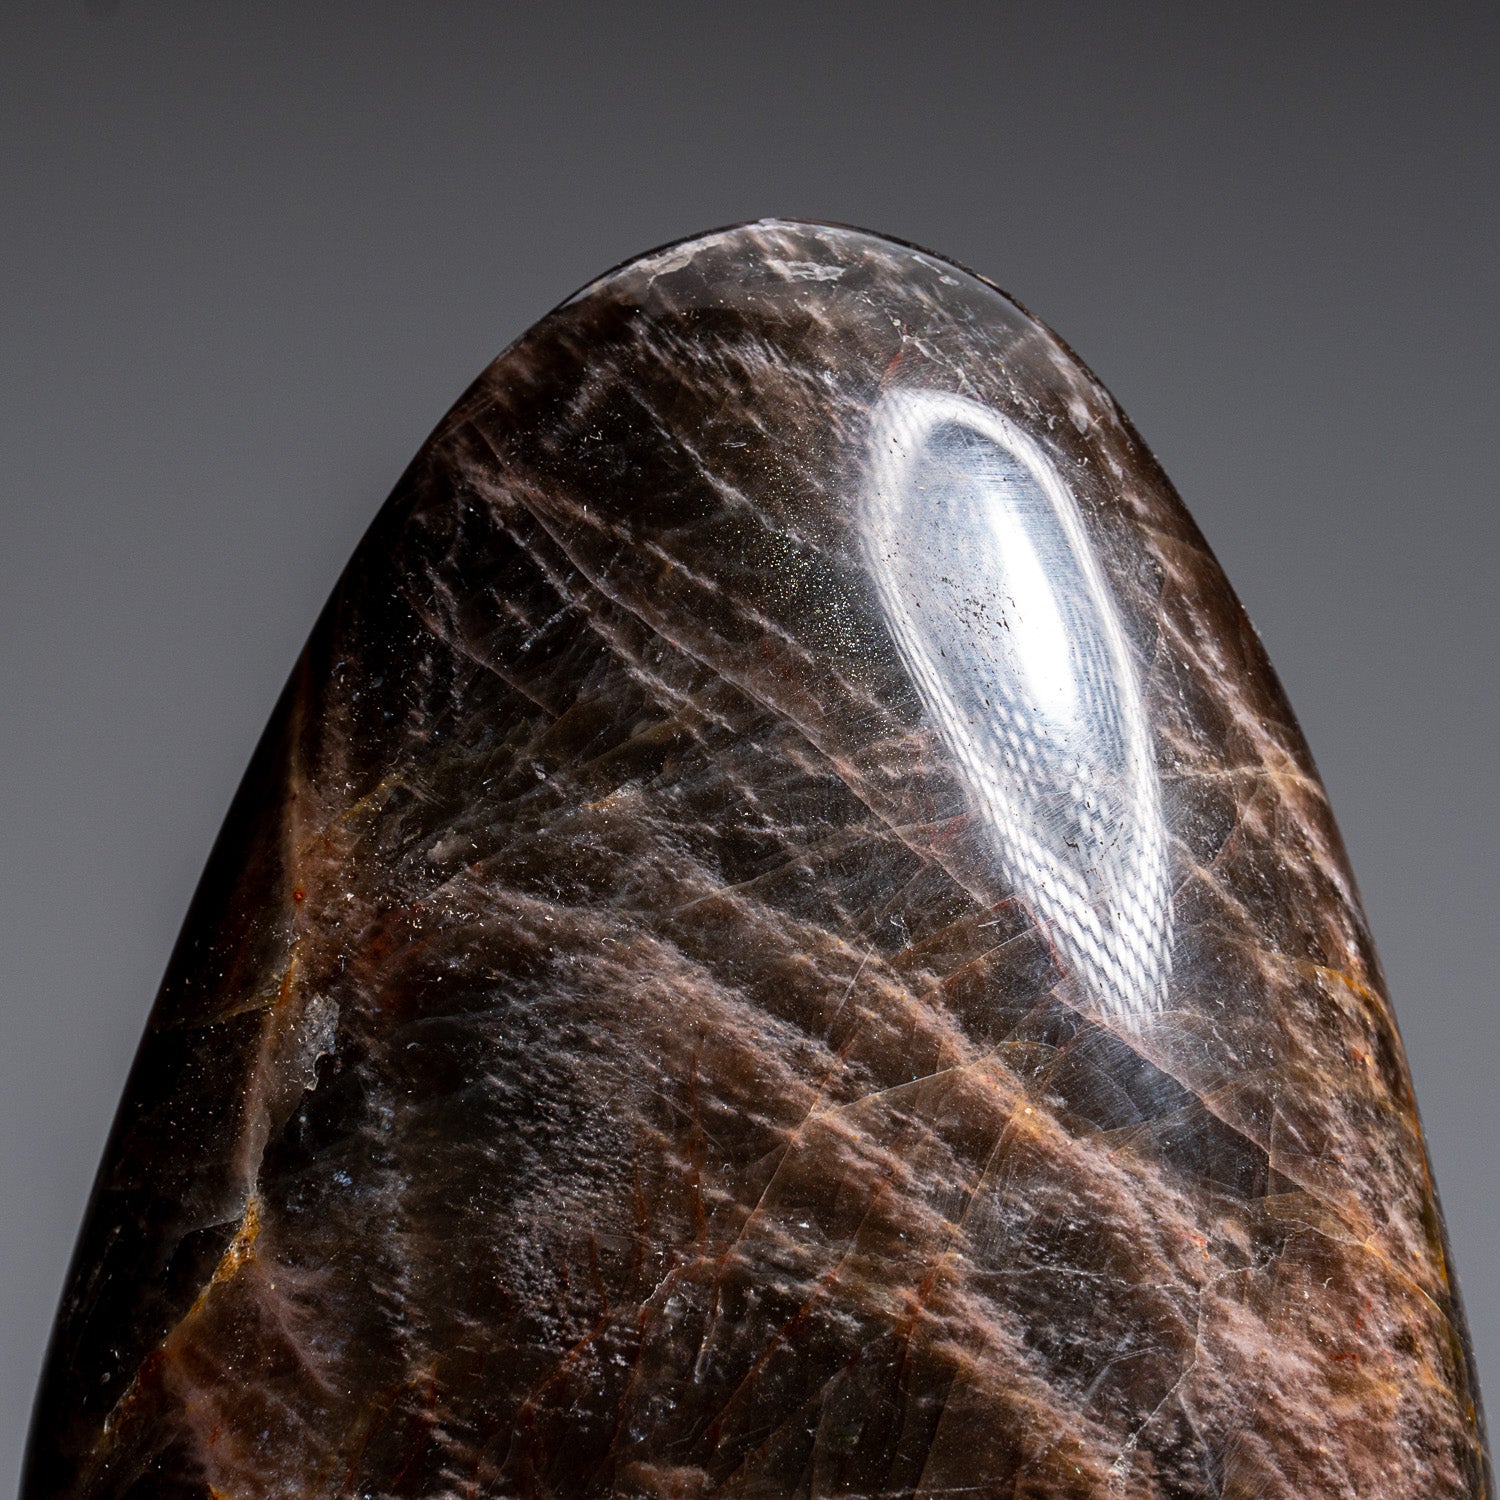 Genuine Polished Black Moonstone Freeform From Madagascar (3.2 lbs)